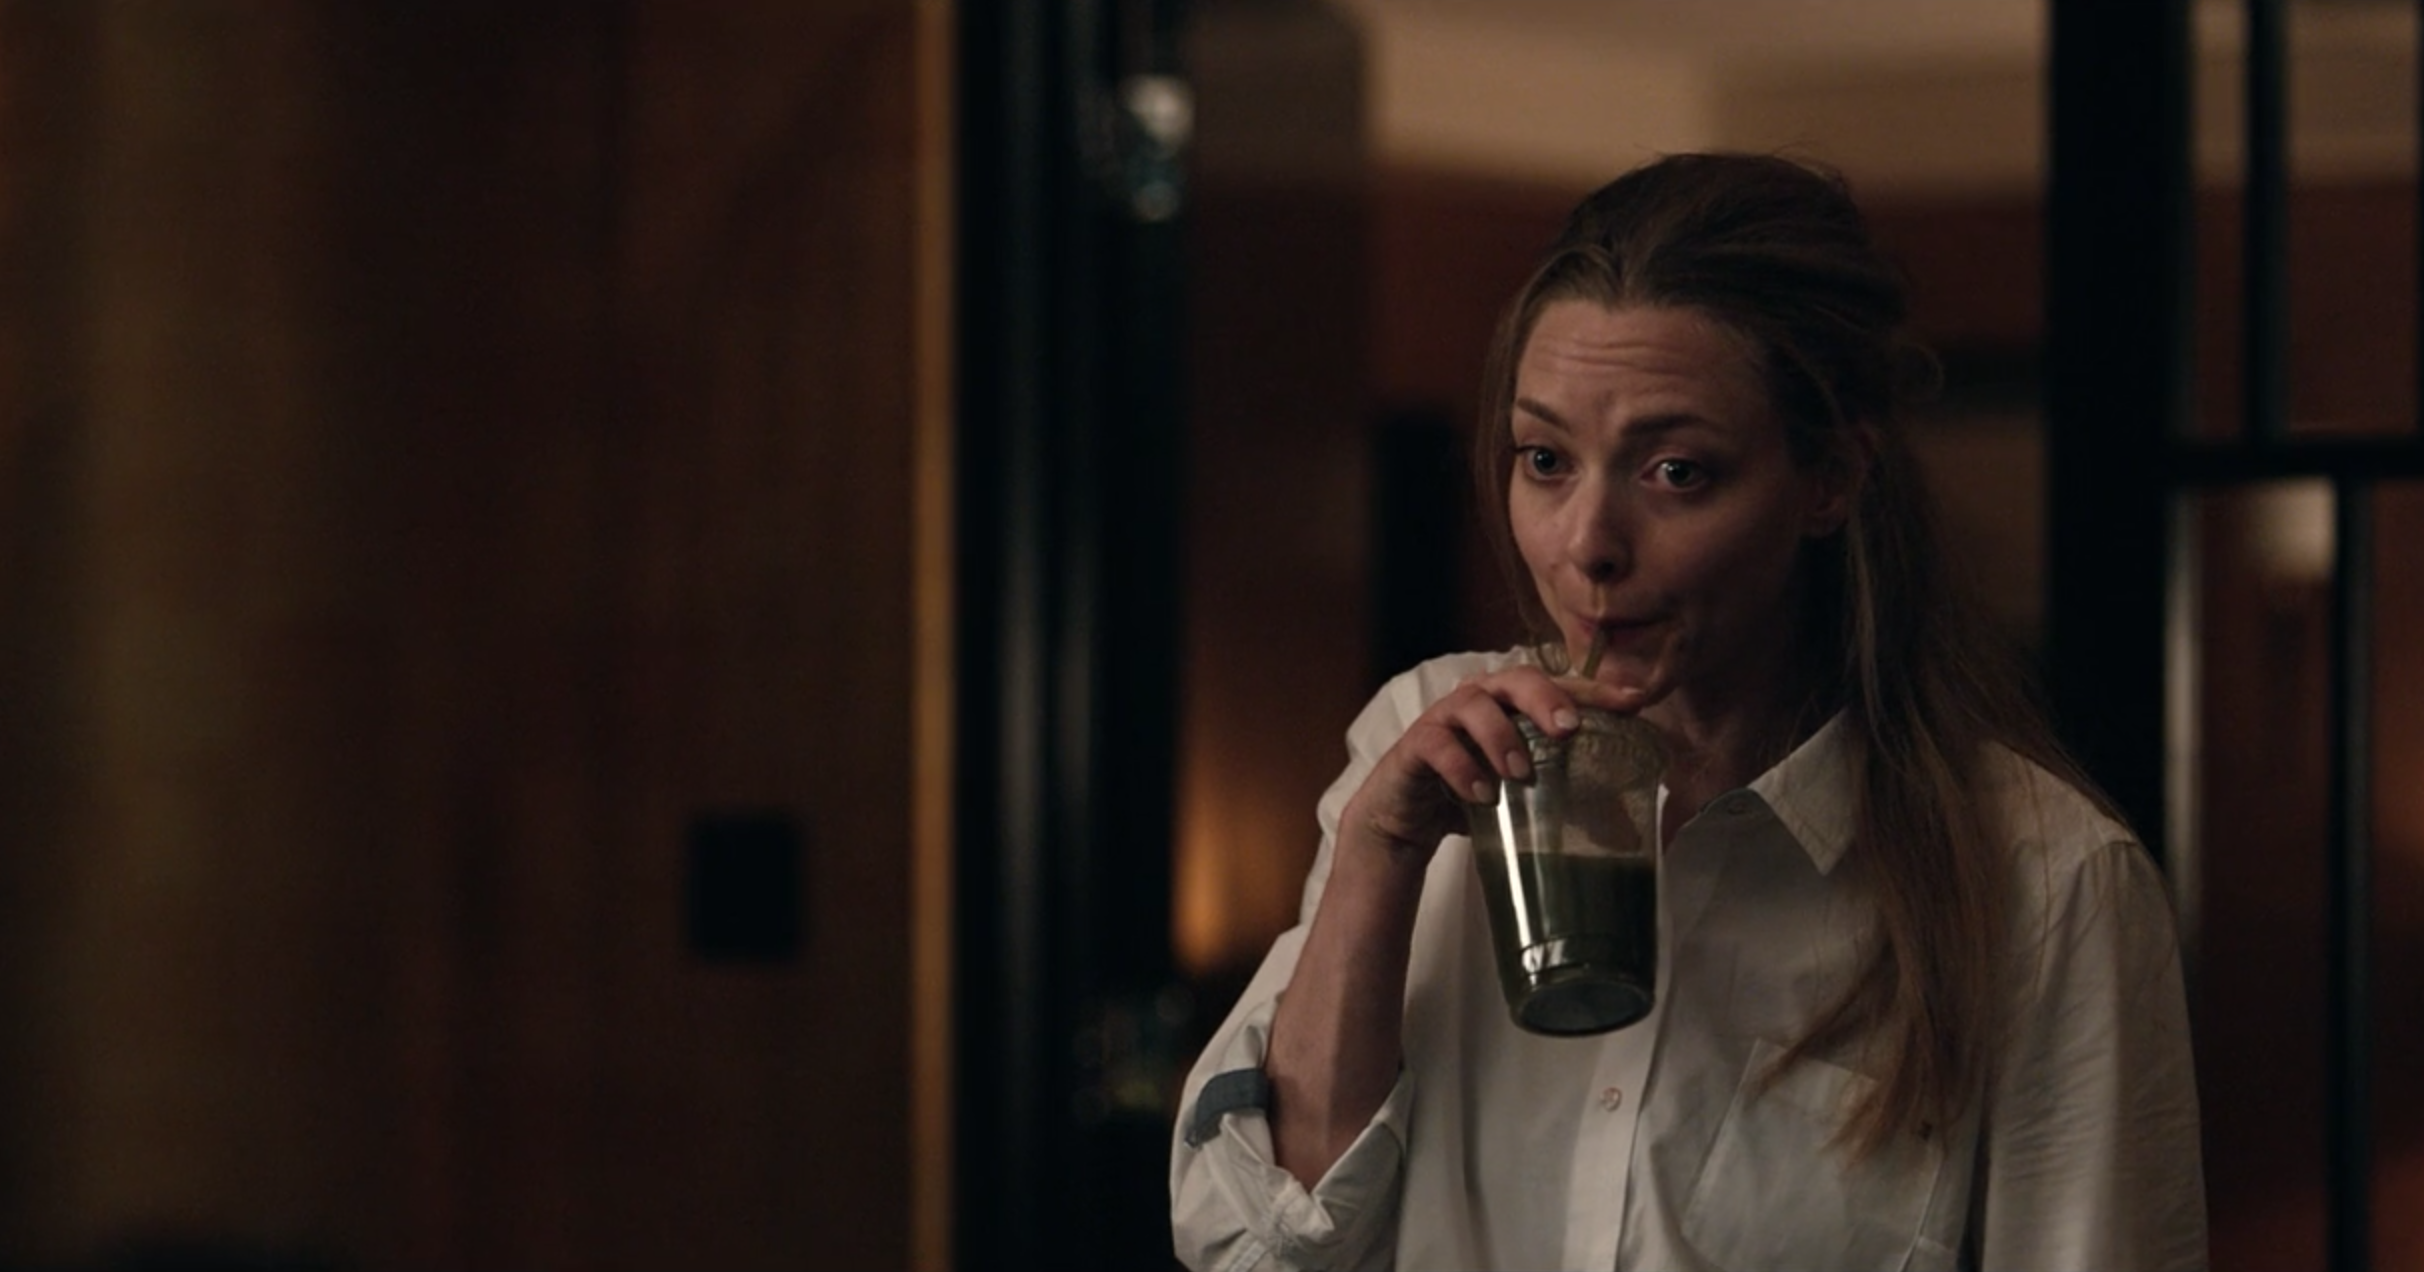 Elizabeth drinking green juice obsessively